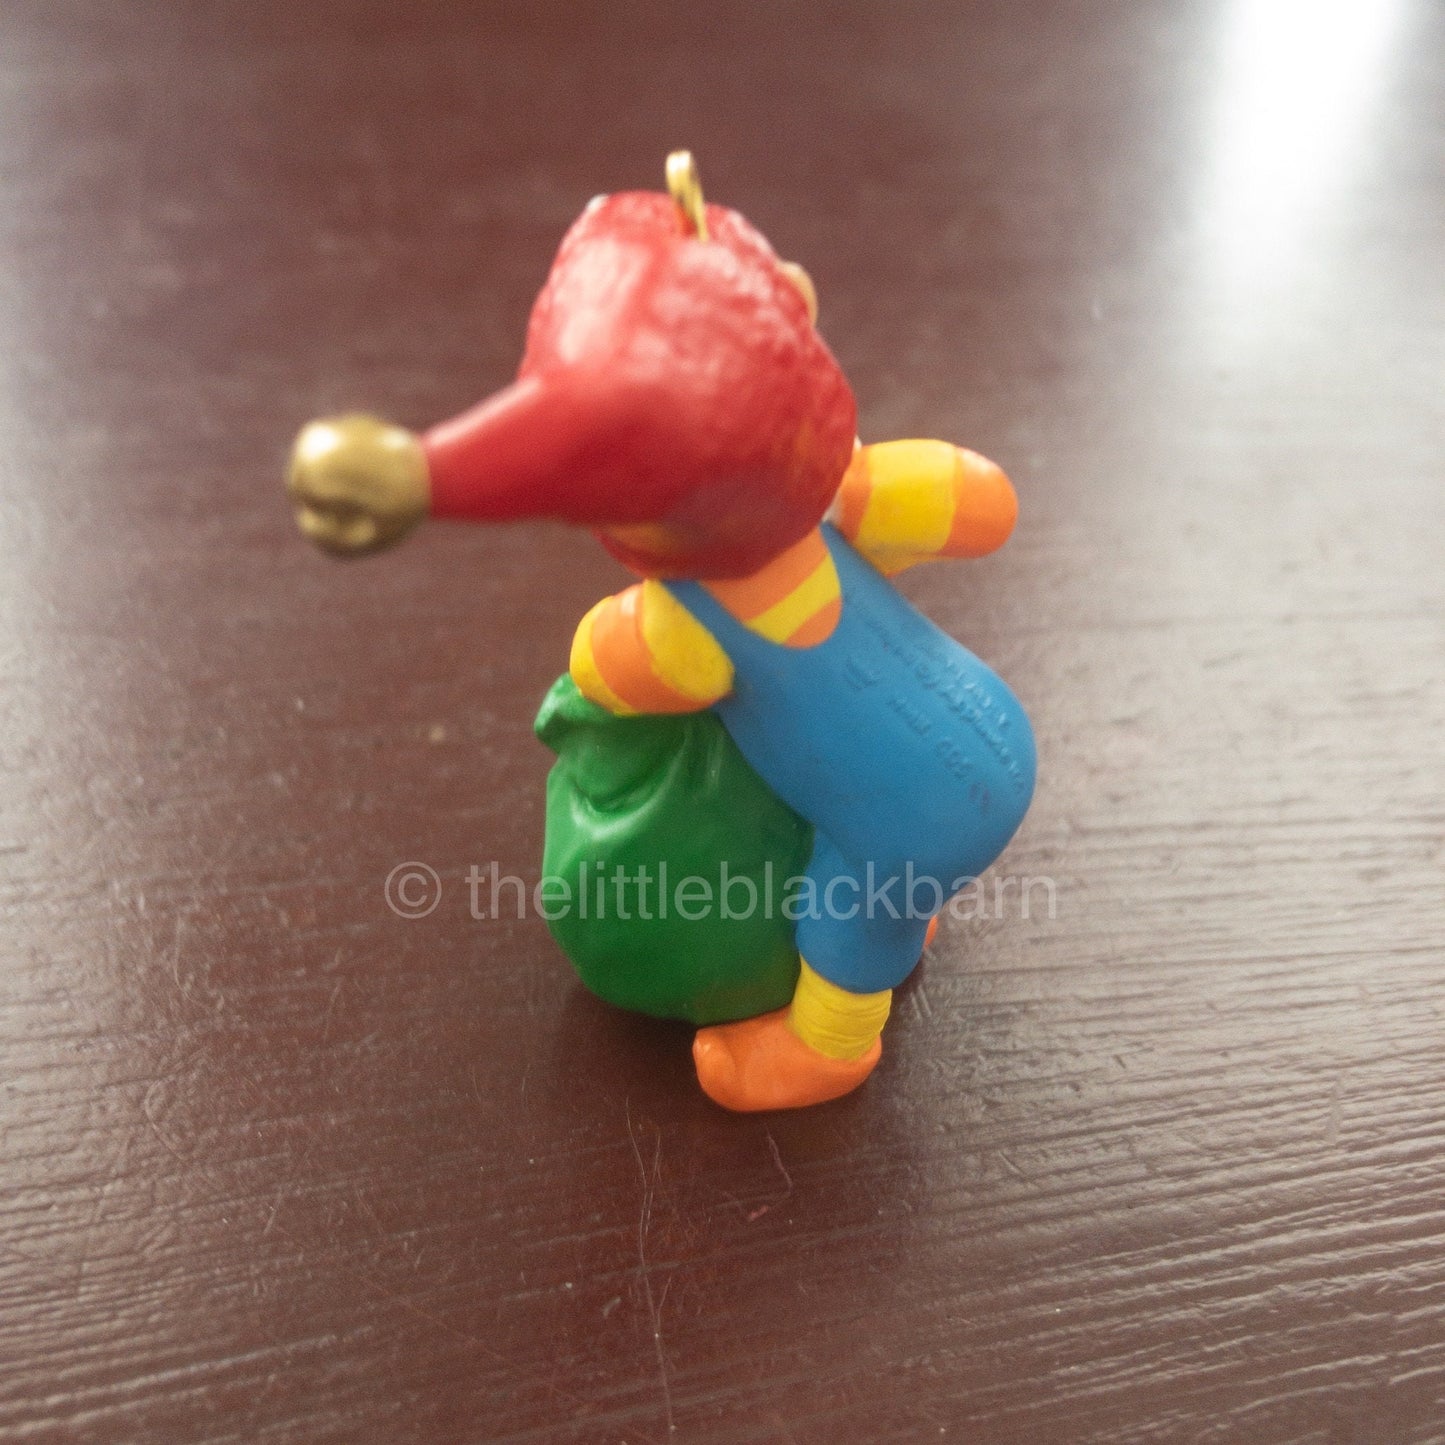 Hallmark, Rudolph's Helper, Club - Miniature, Dated 1996, Keepsake Ornament, QXC4171*Dated 1996 from Ornament Collector's Club